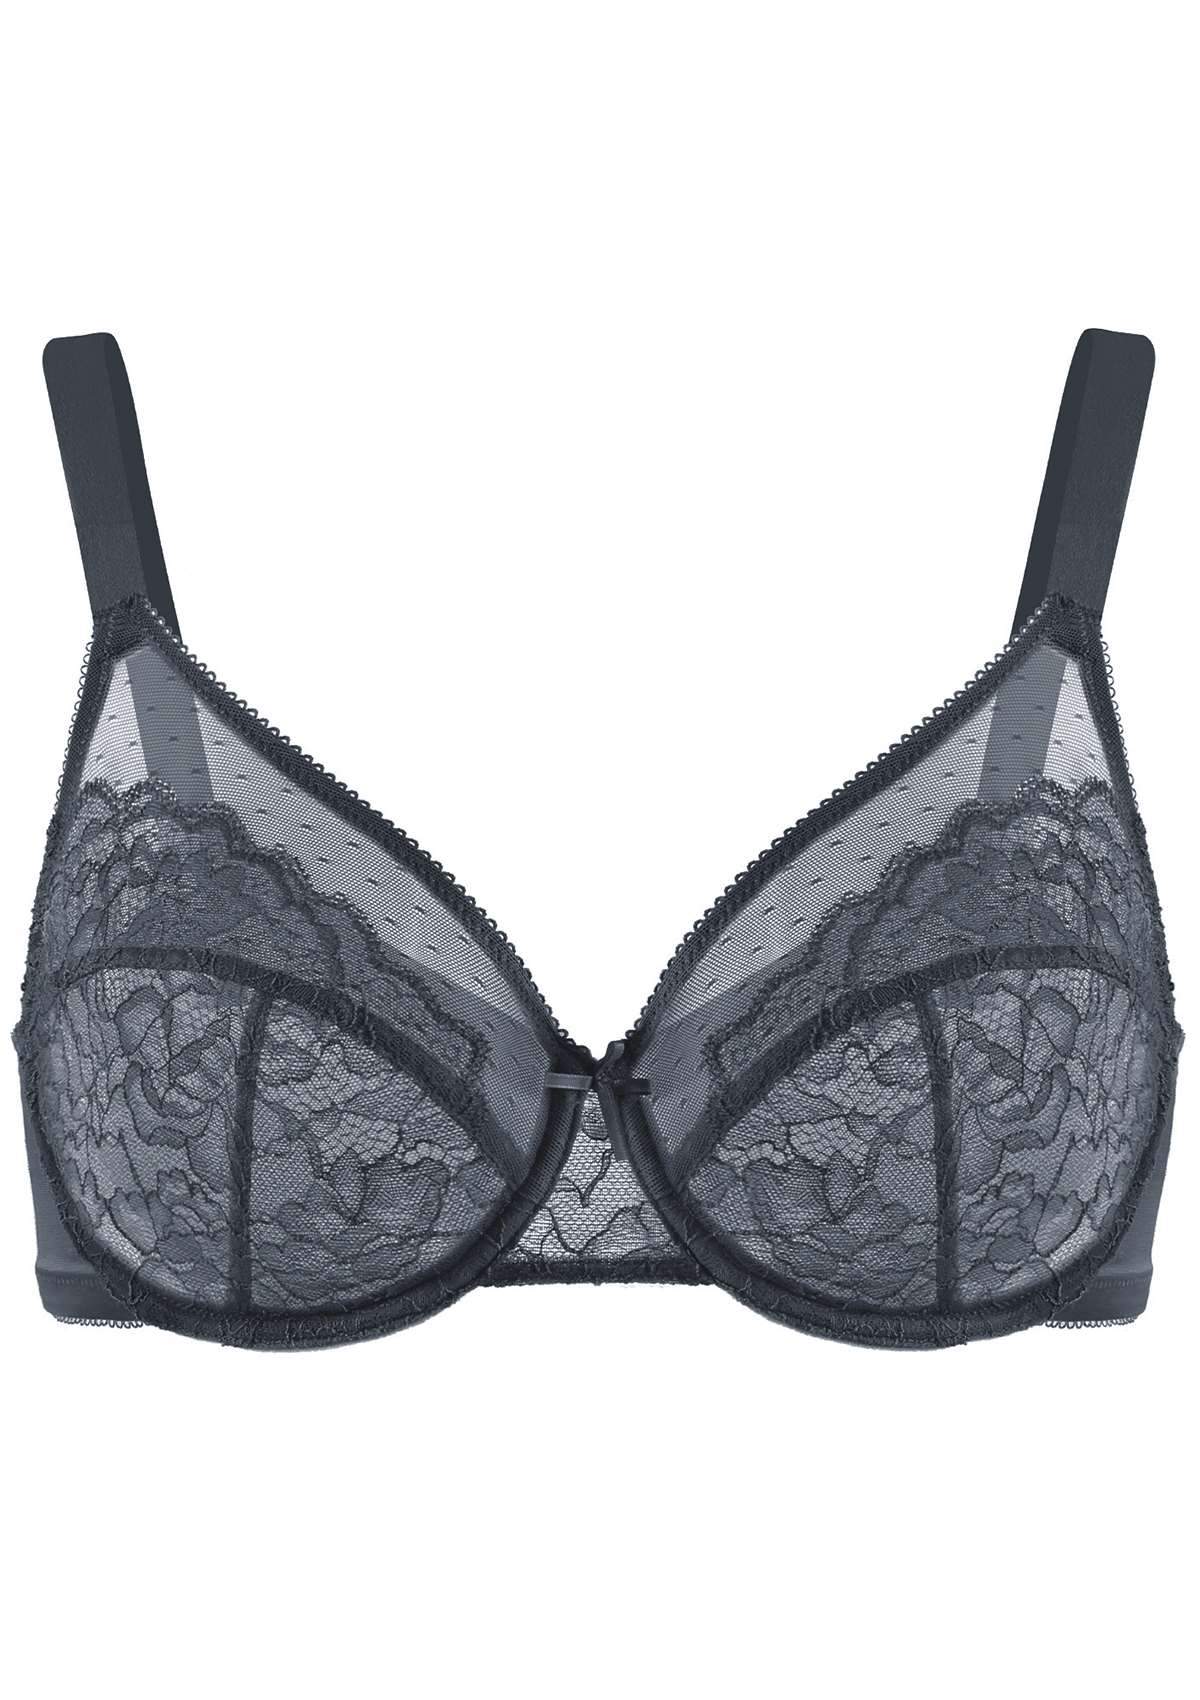 HSIA Enchante Matching Bra And Underwear Sets: Uplift Big Boobs Bra - Dark Gray / 40 / C